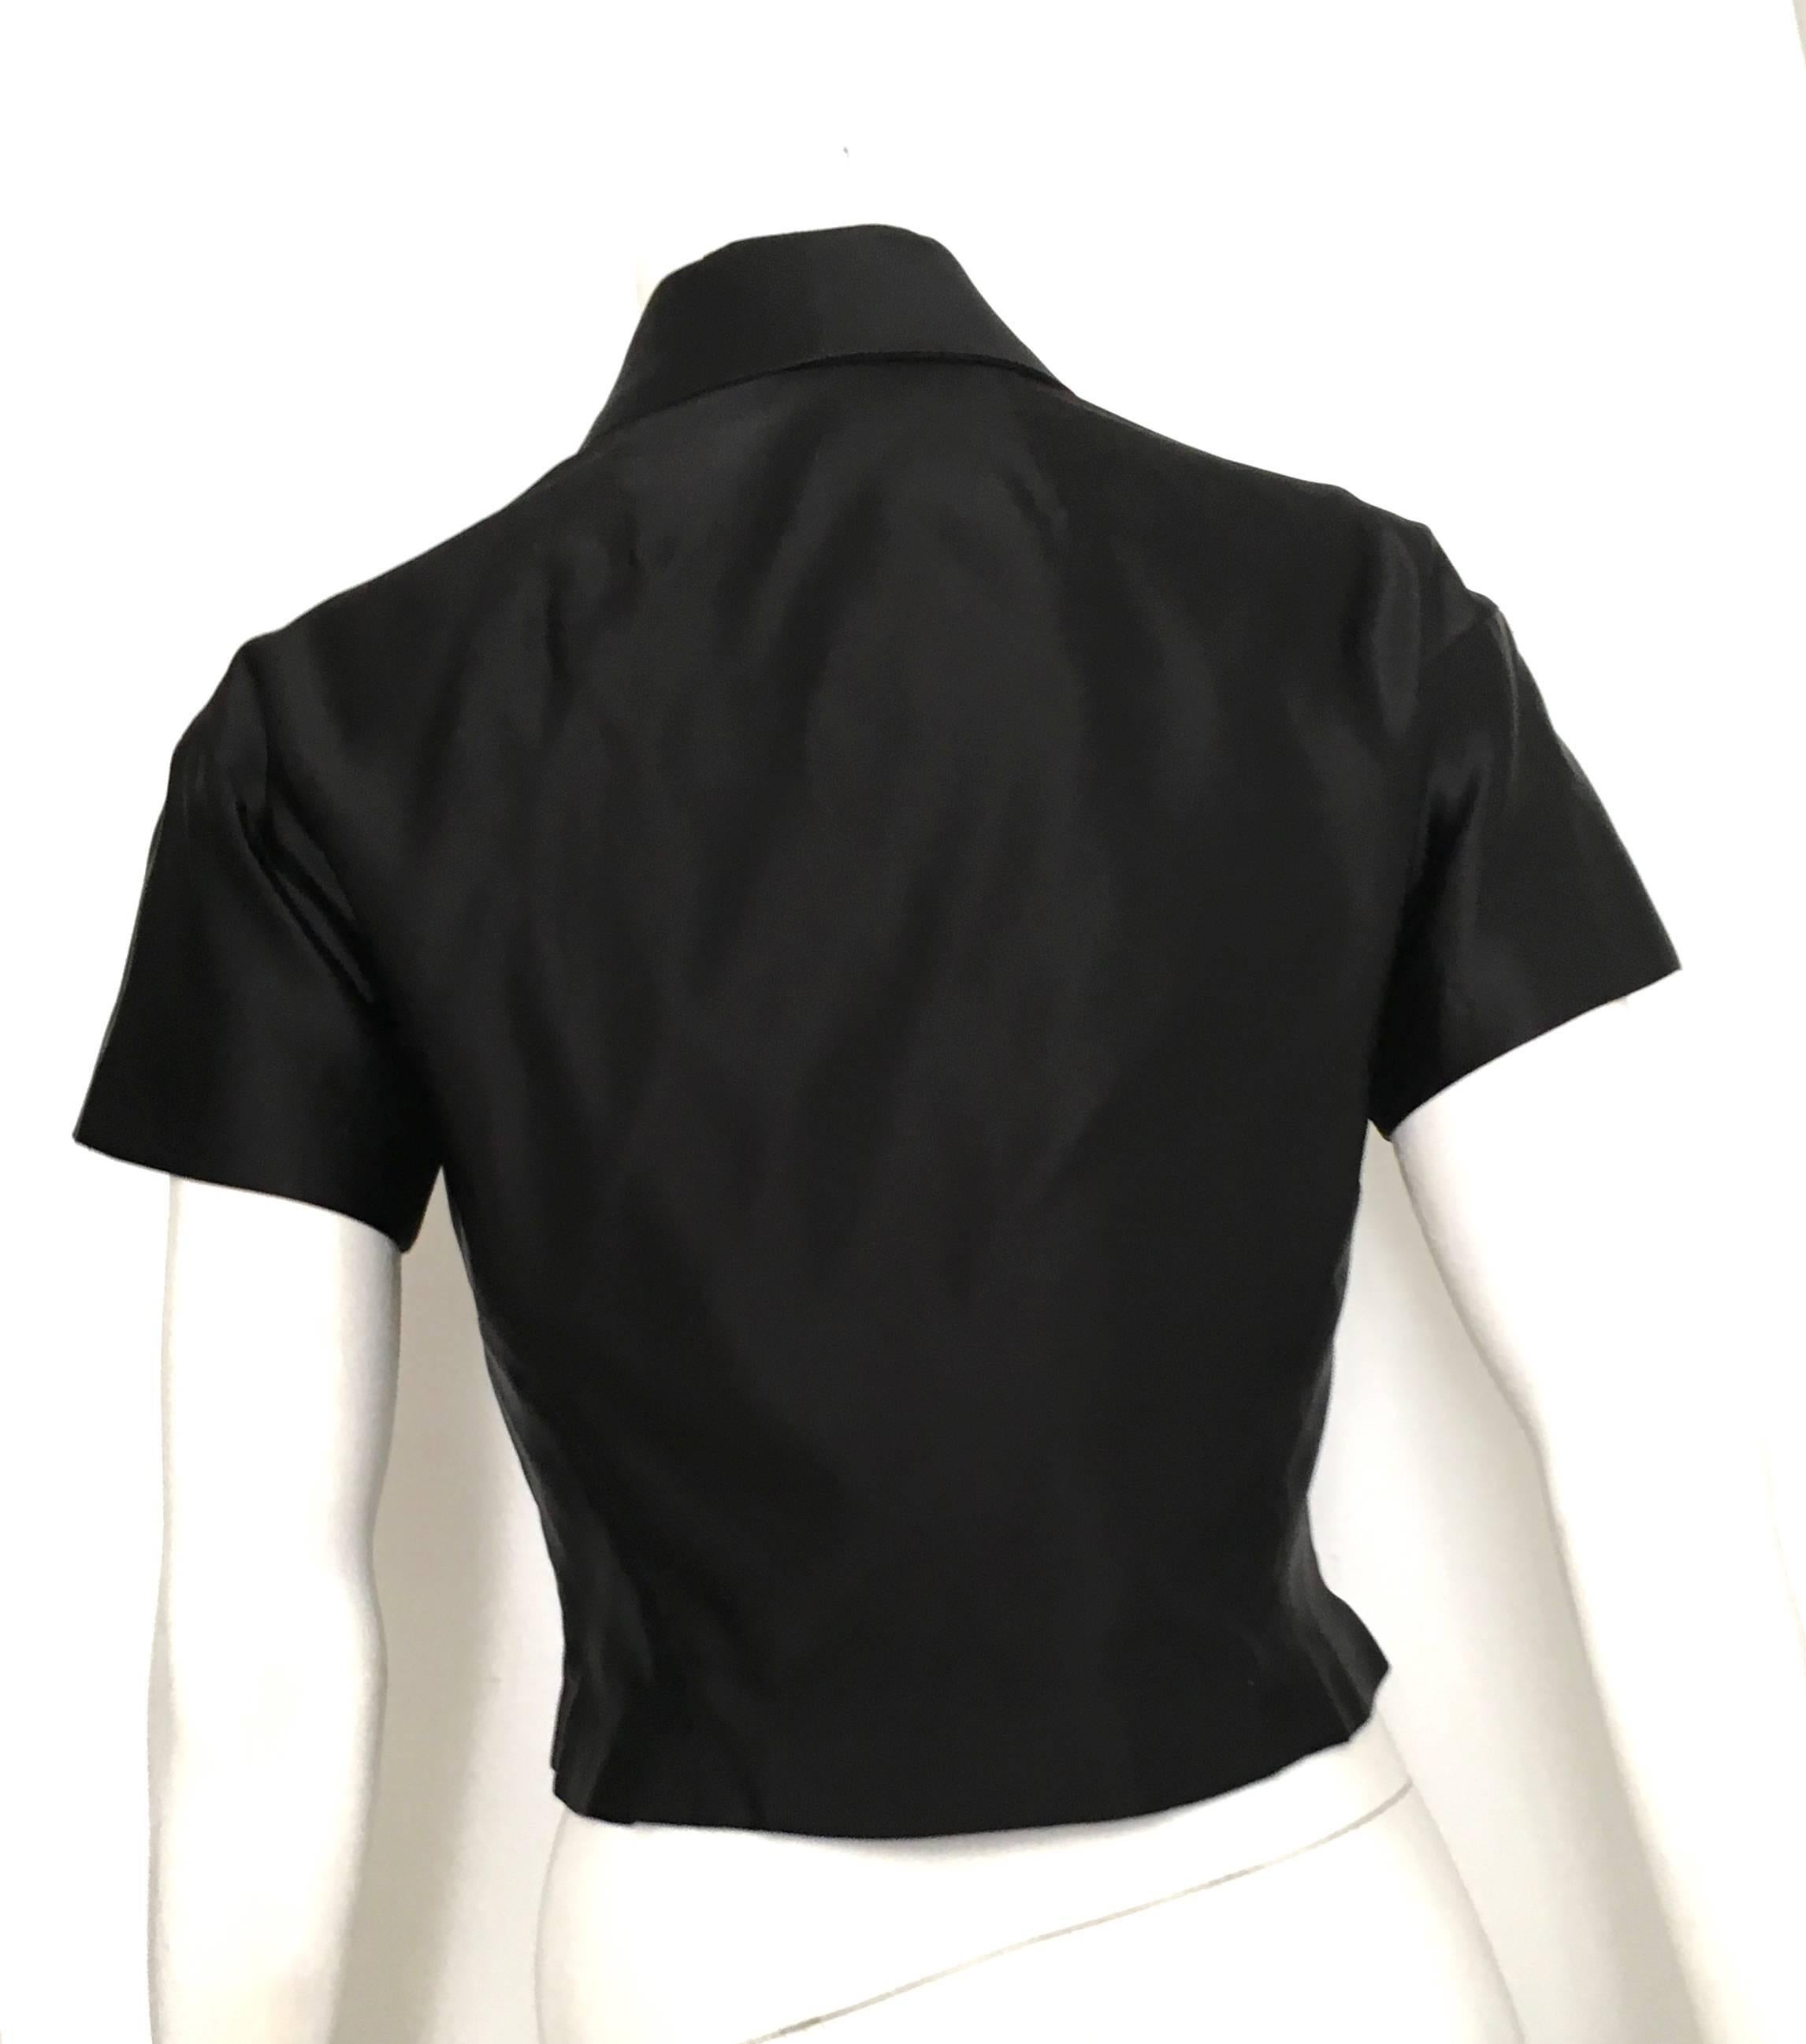 Women's Christian Dior 1950s Black Evening Silk Blouse Size 4.